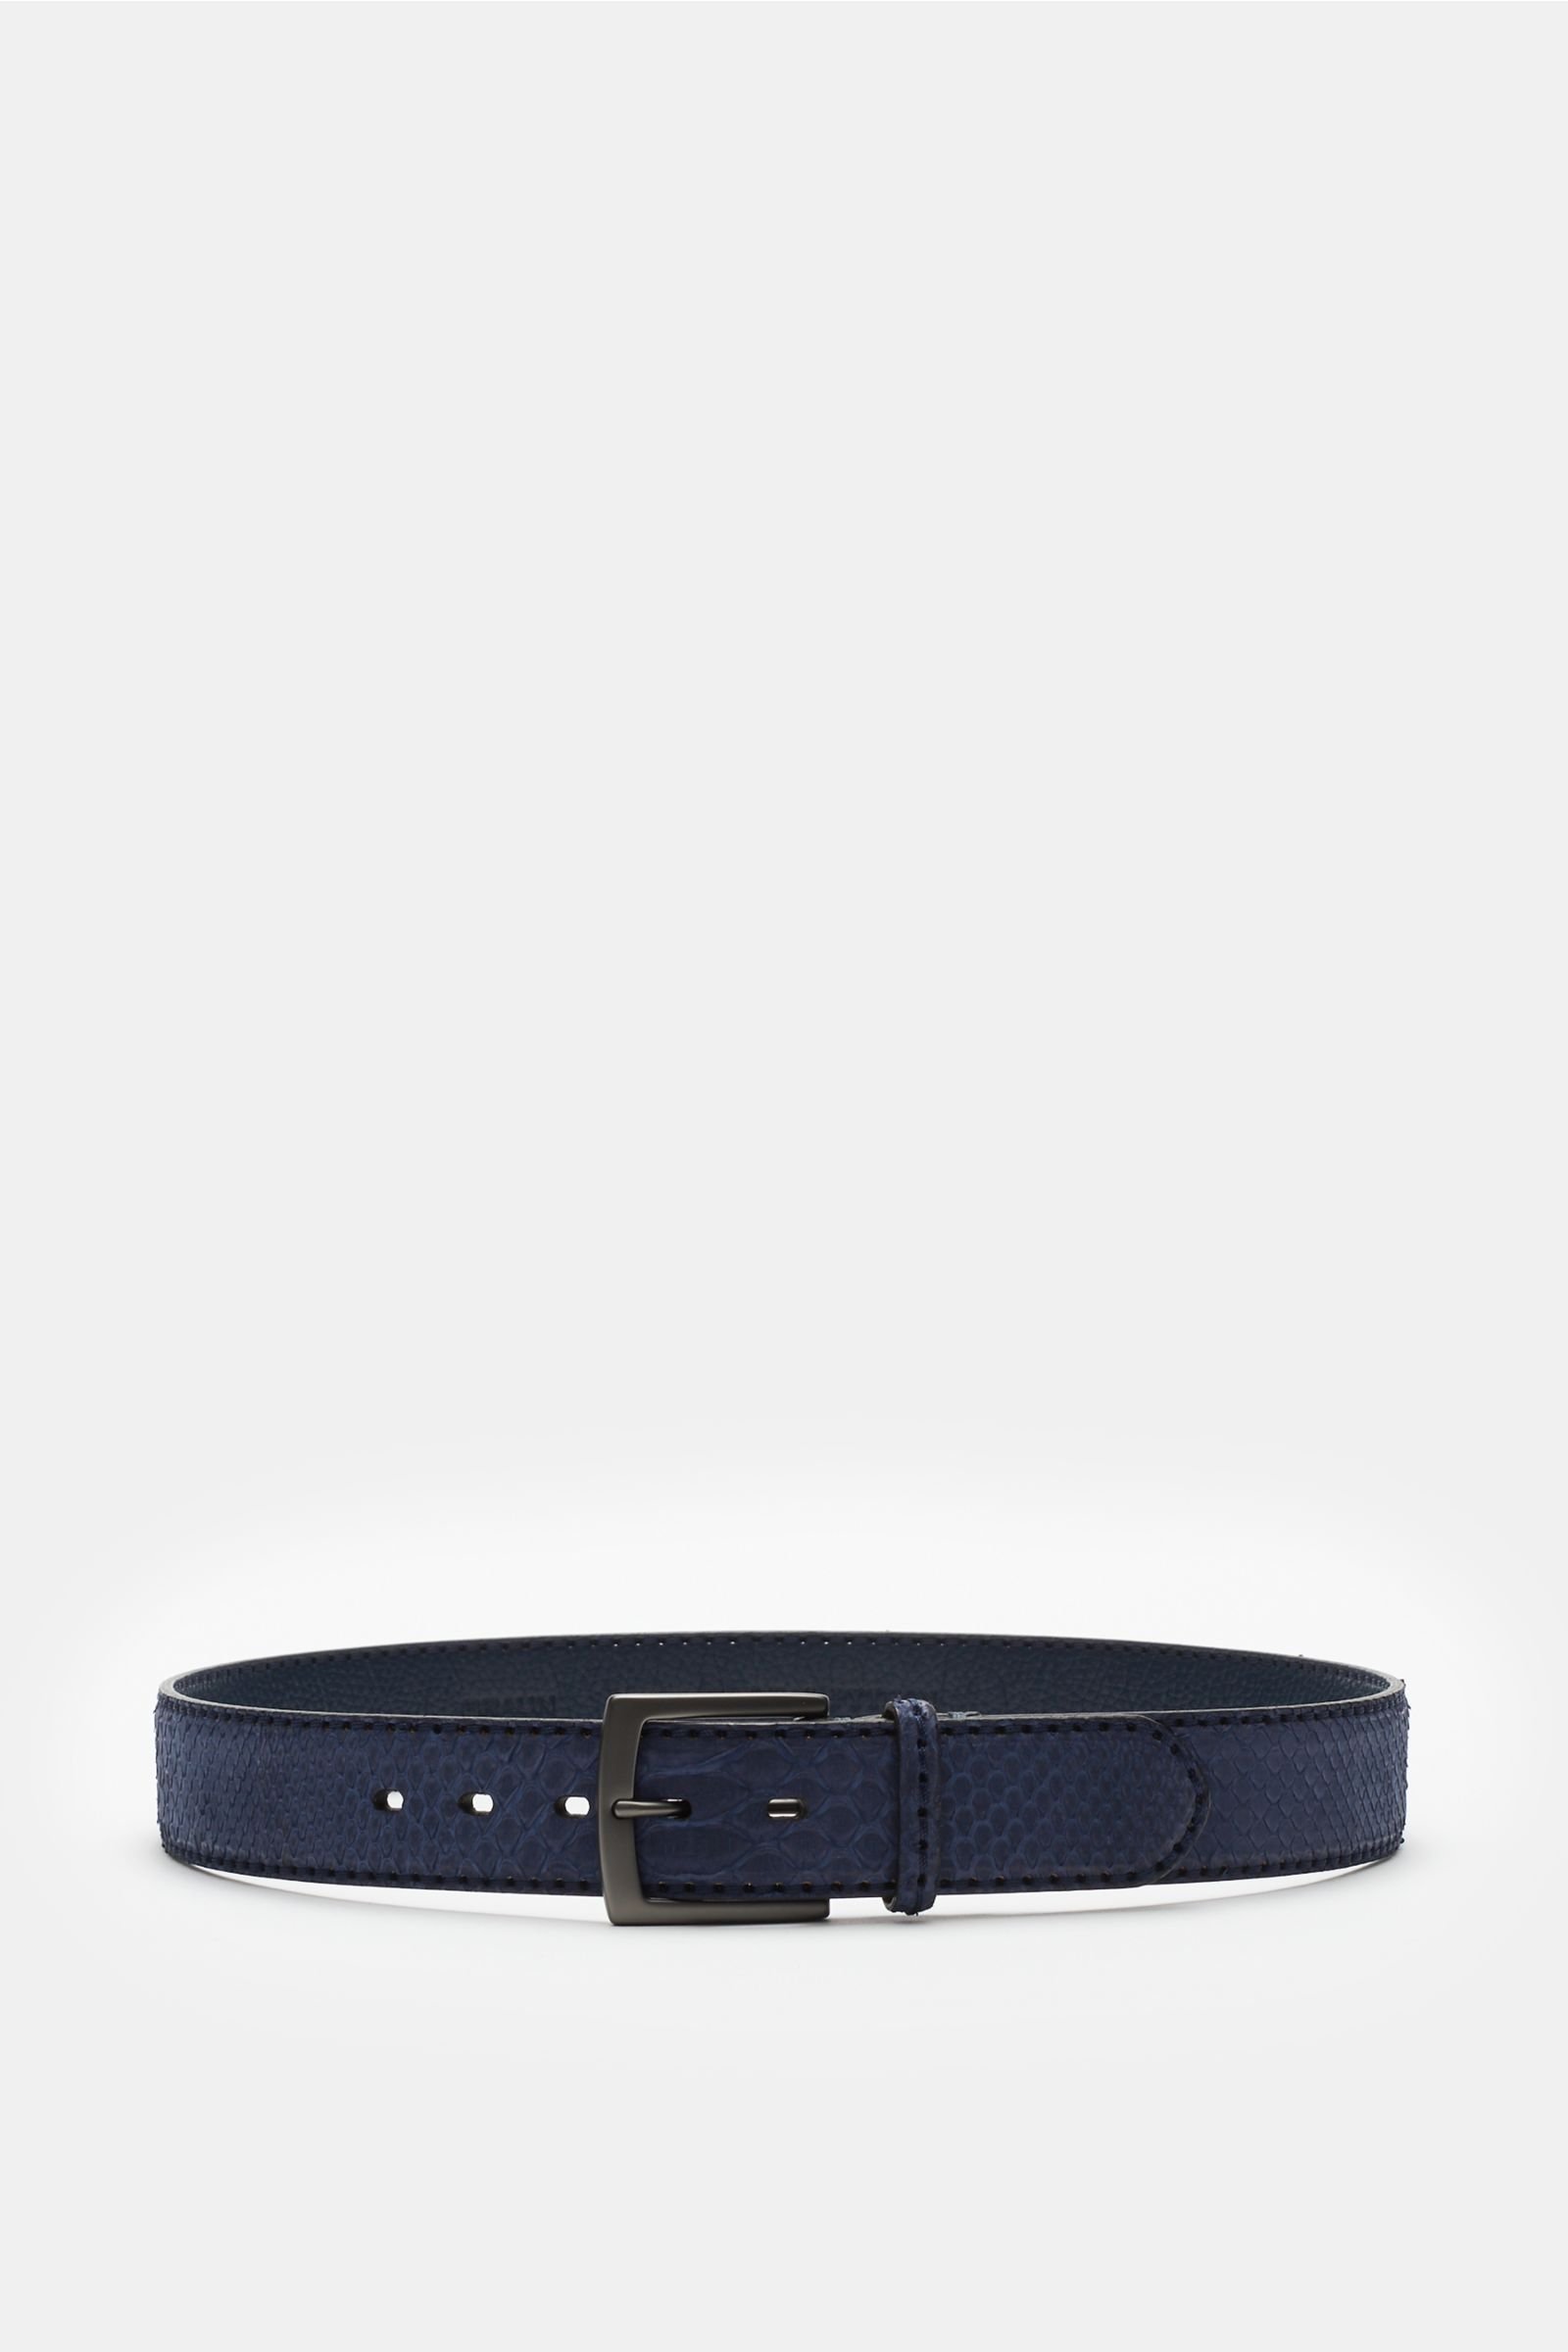 Python leather belt navy